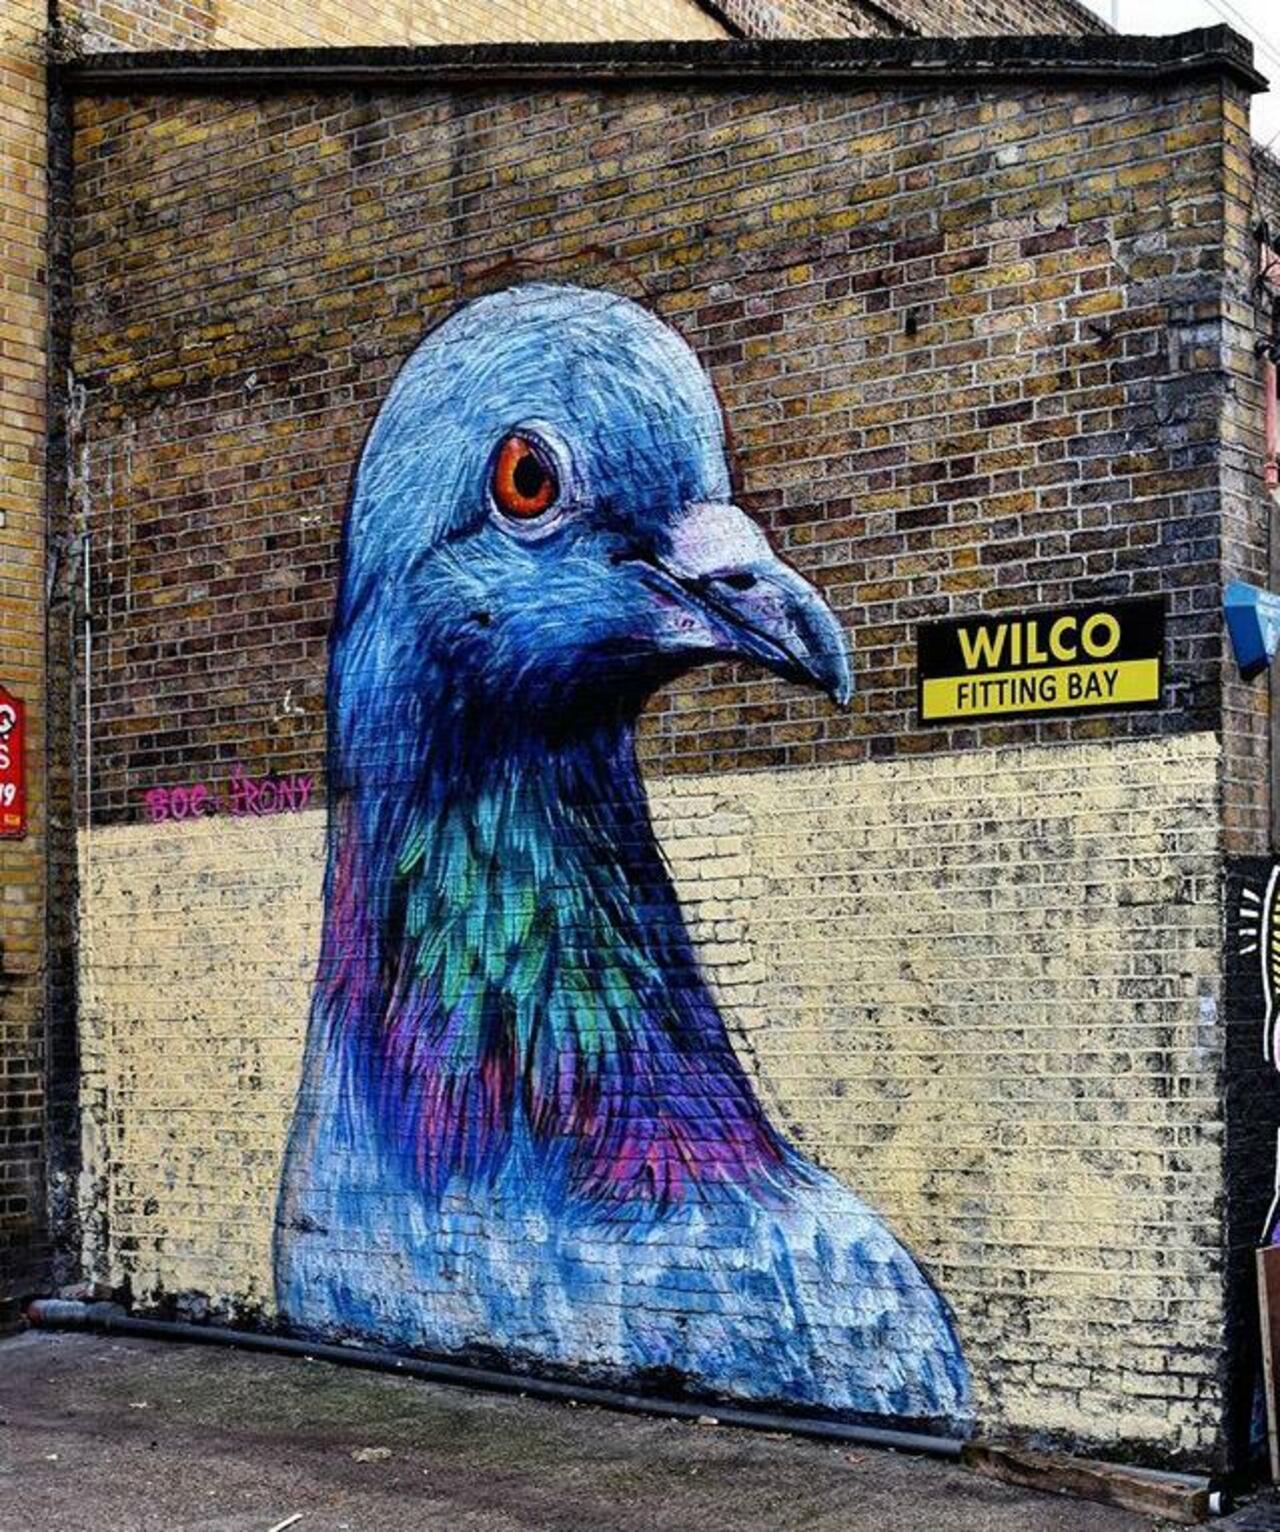 Street Art by Placee Boe & whoamirony in London 

#art #graffiti #mural #streetart http://t.co/xrzzJwFQ25 … … … … http://twitter.com/GoogleStreetArt/status/652357036542414848/photo/1/large?utm_source=fb&utm_medium=fb&utm_campaign=charlesjackso14&utm_content=652360951732281344